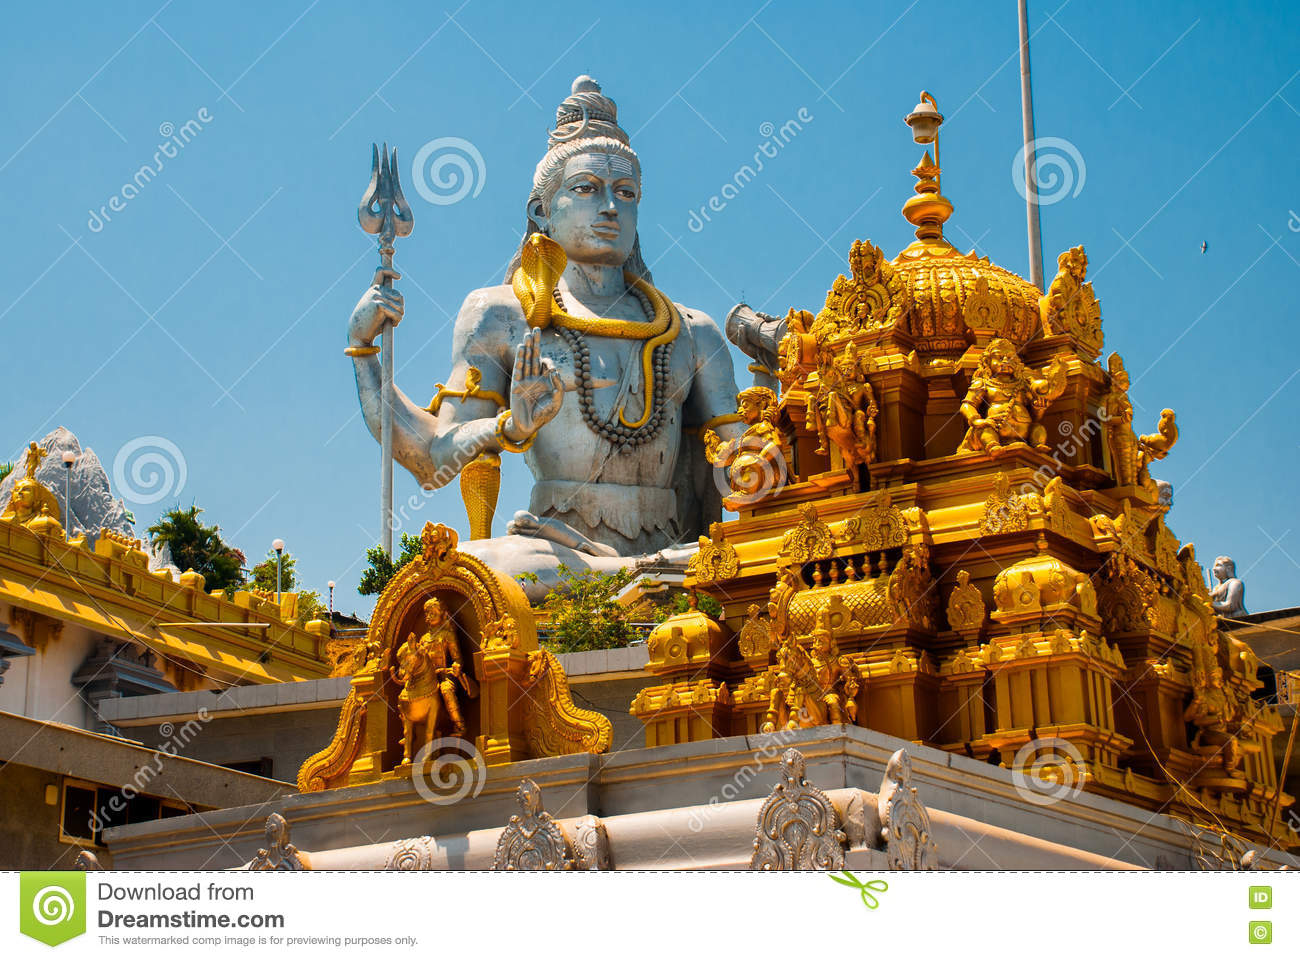 Statue Of Lord Shiva In Murudeshwar. Temple In Karnataka, India.